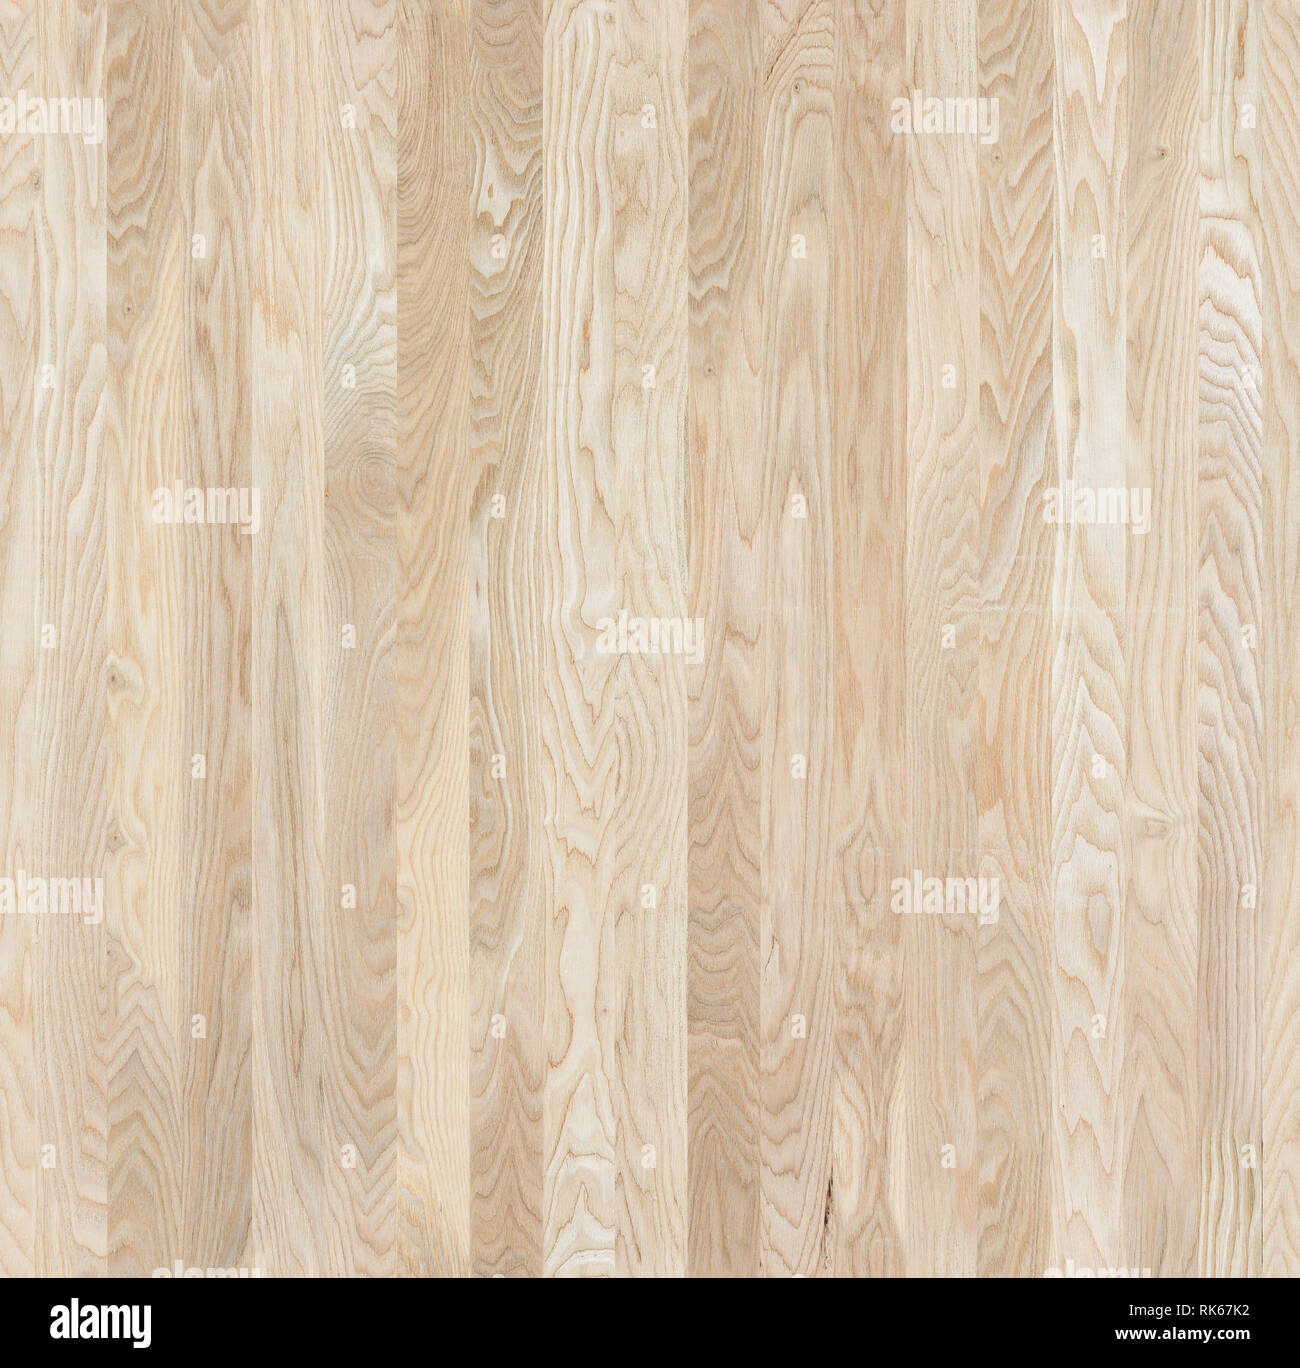 Seamless Texture Of Ash Tree Furniture Board Stock Photo